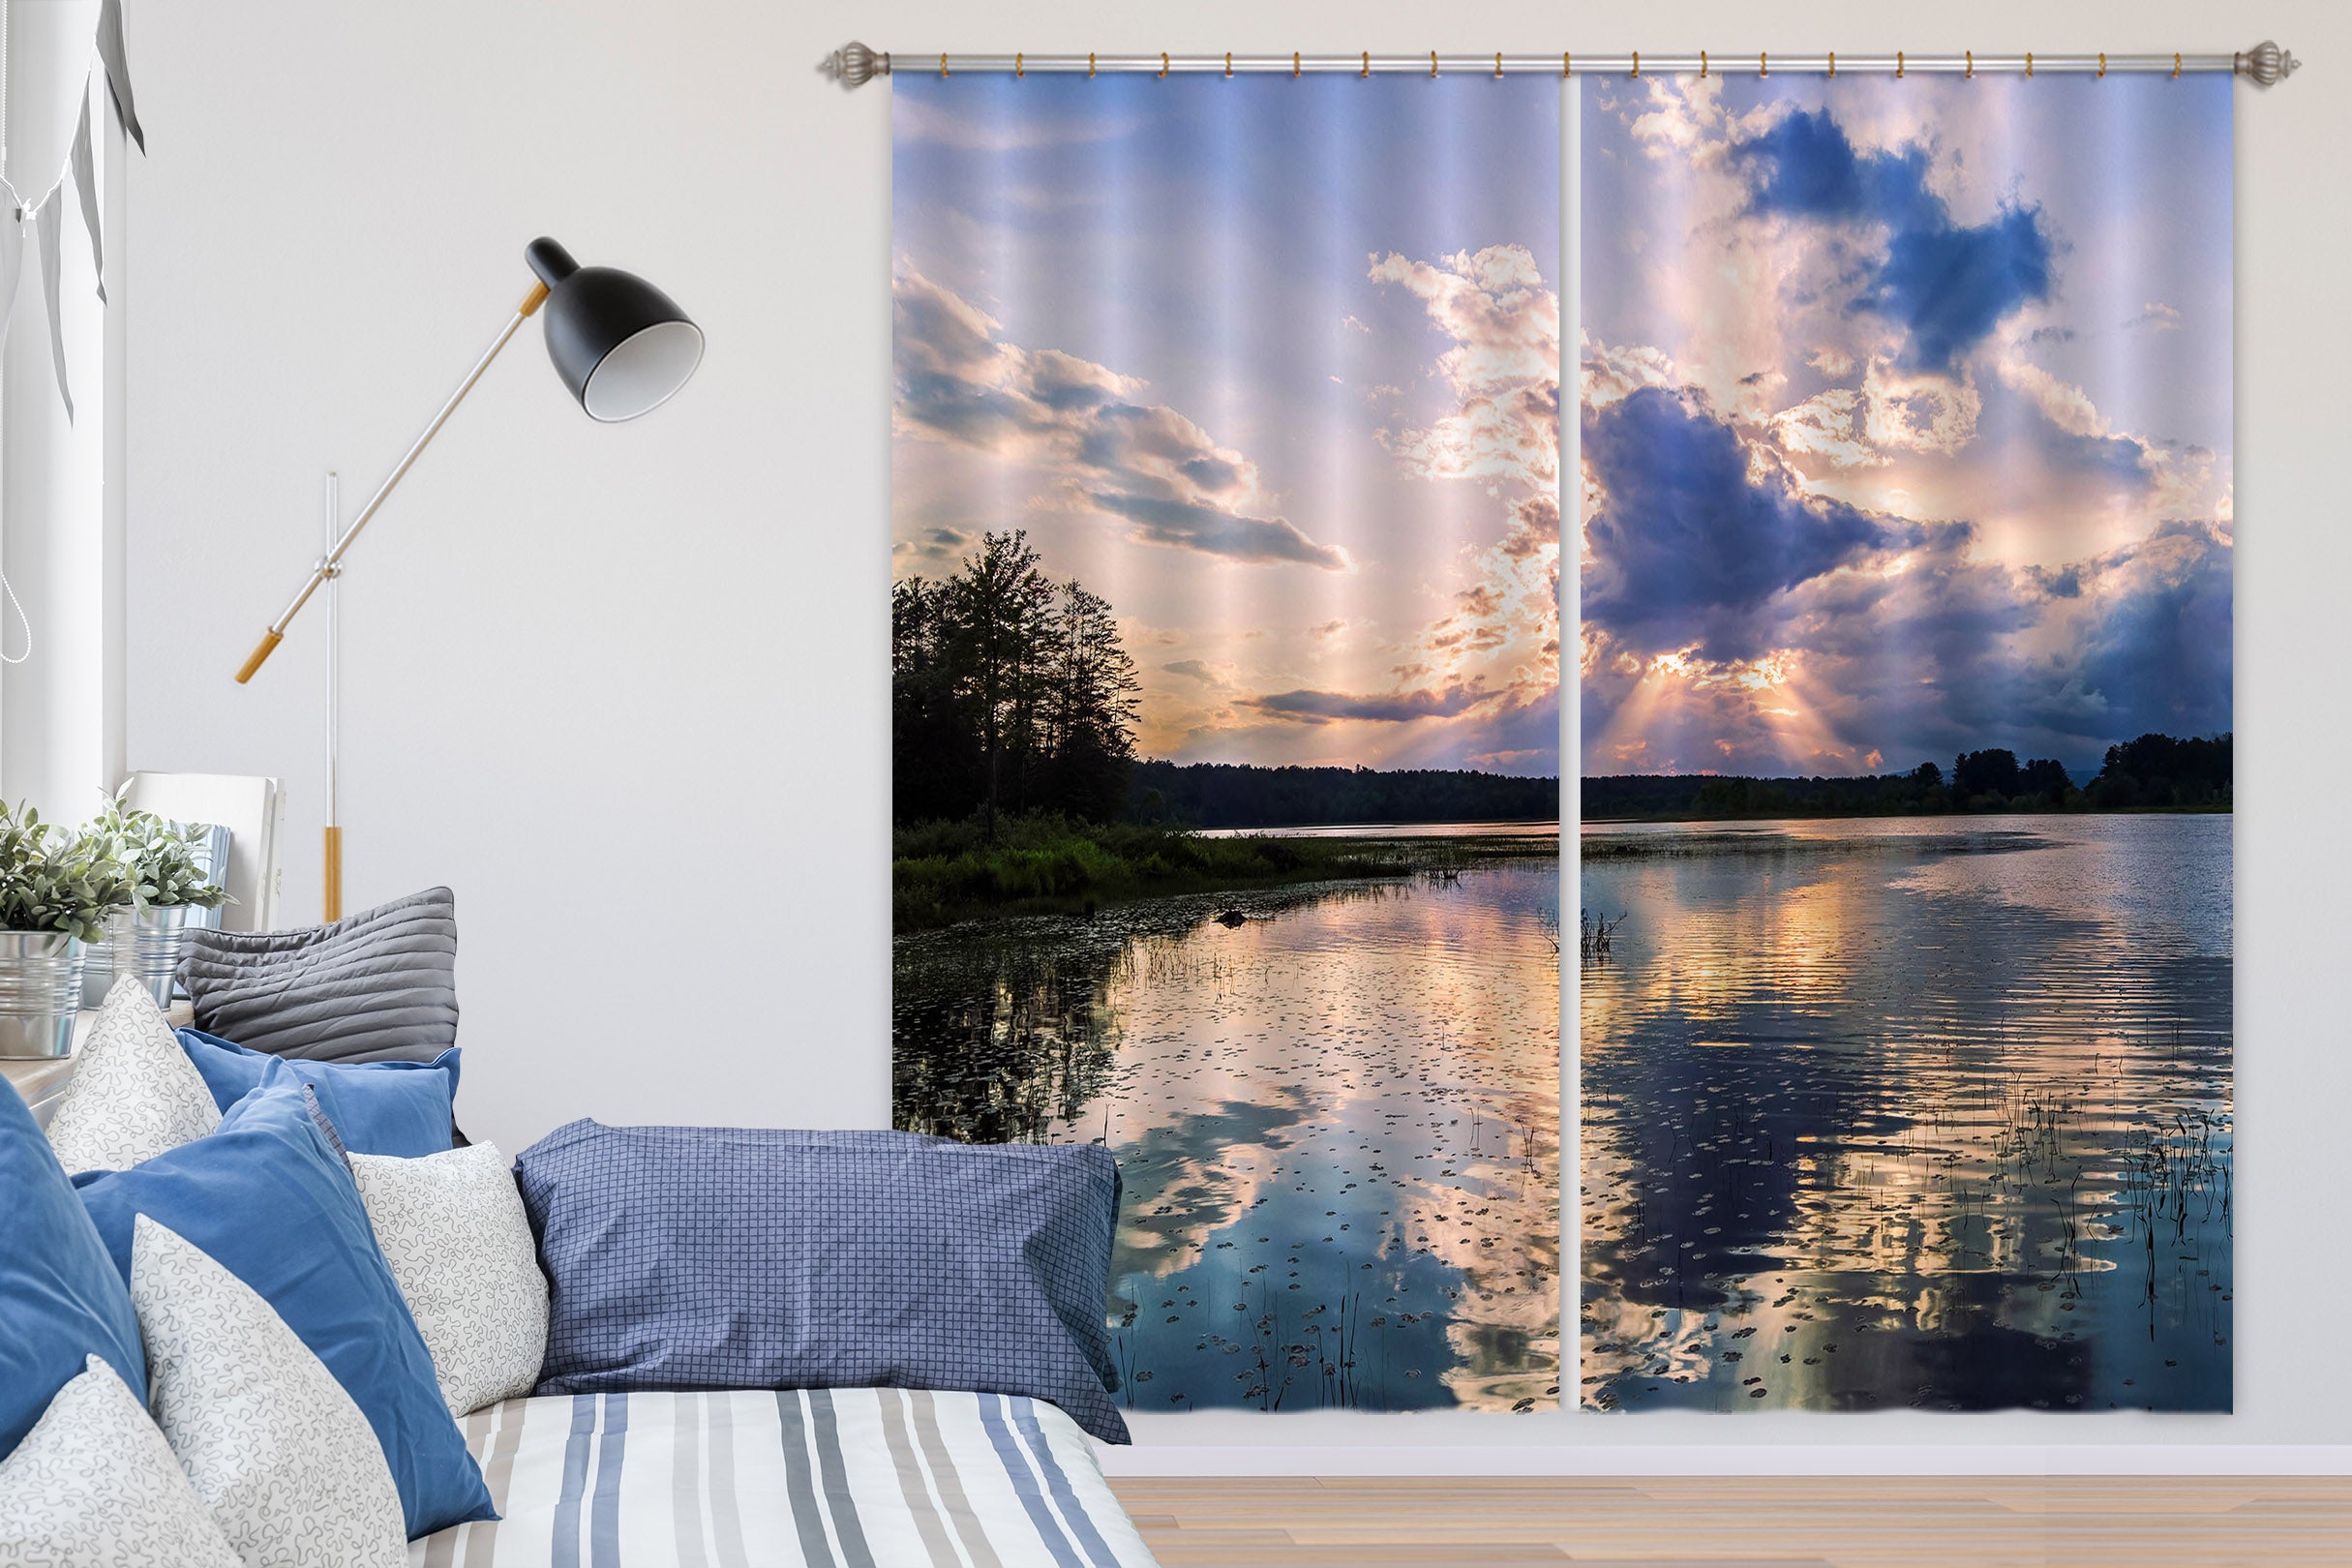 3D Reflecting Sunset 86092 Jerry LoFaro Curtain Curtains Drapes